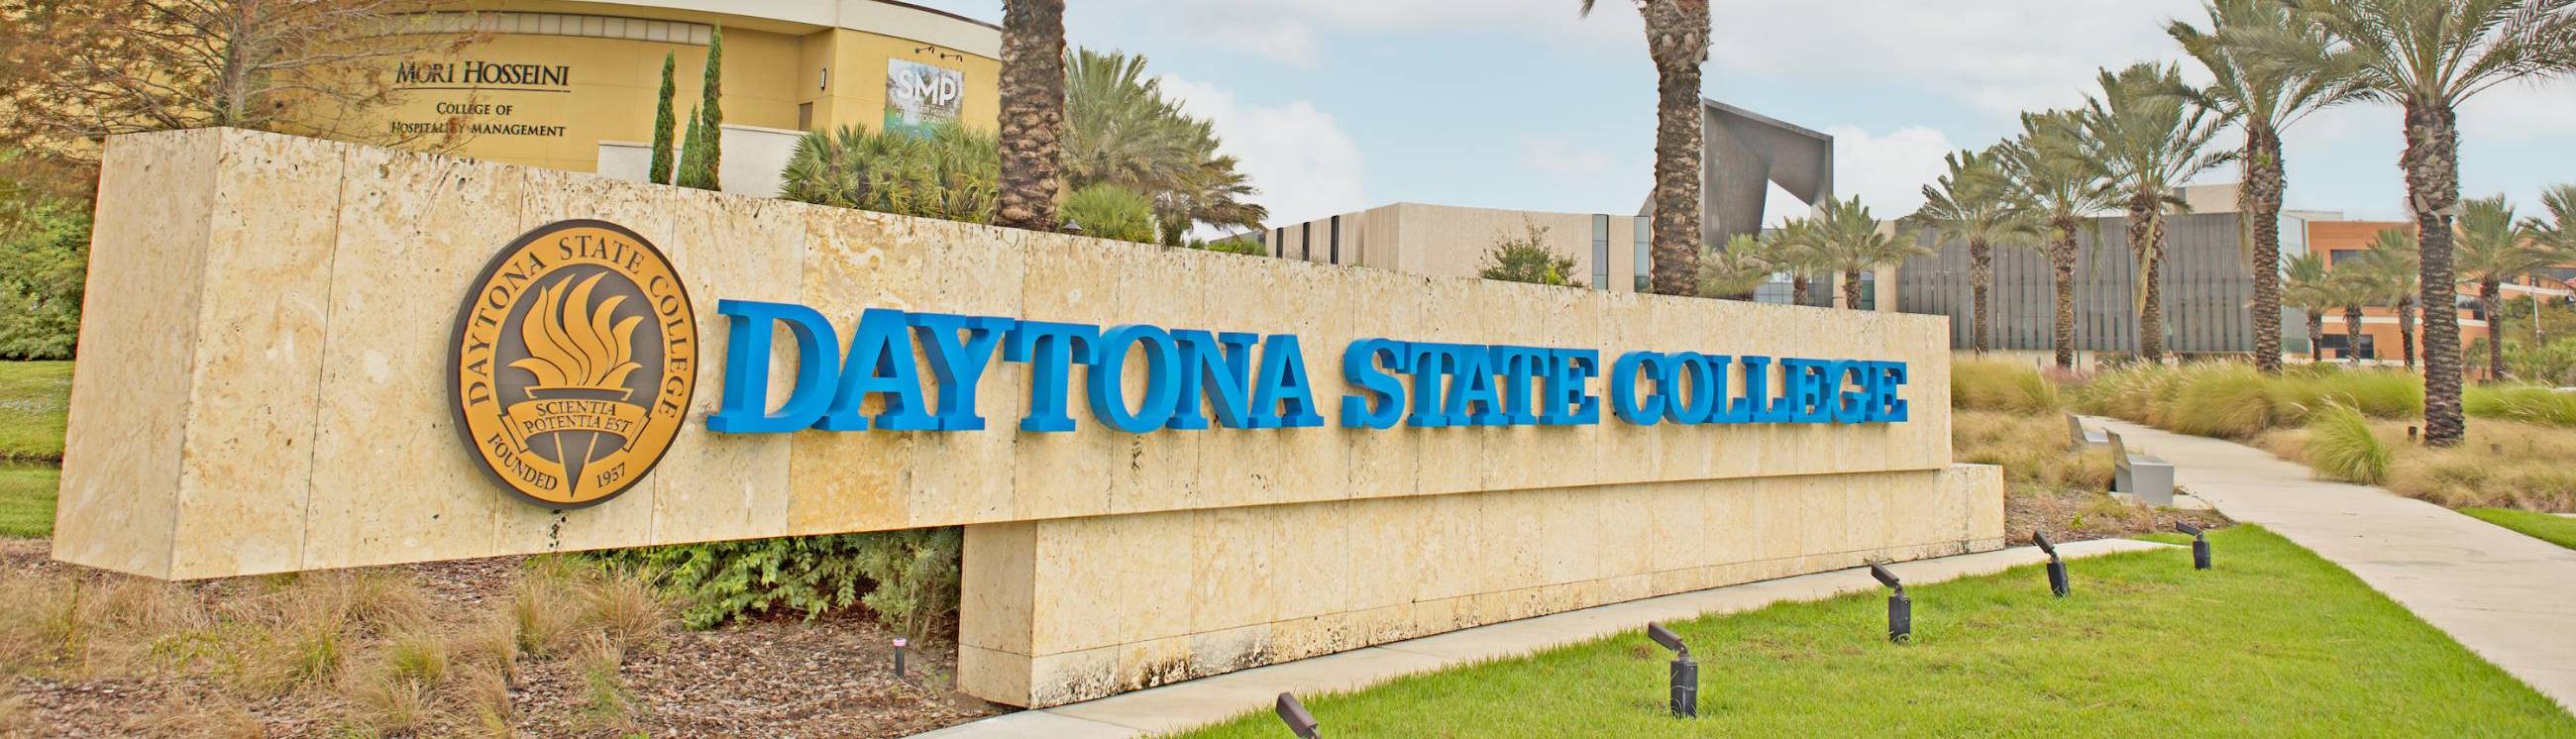 DSC Daytona campus street sign